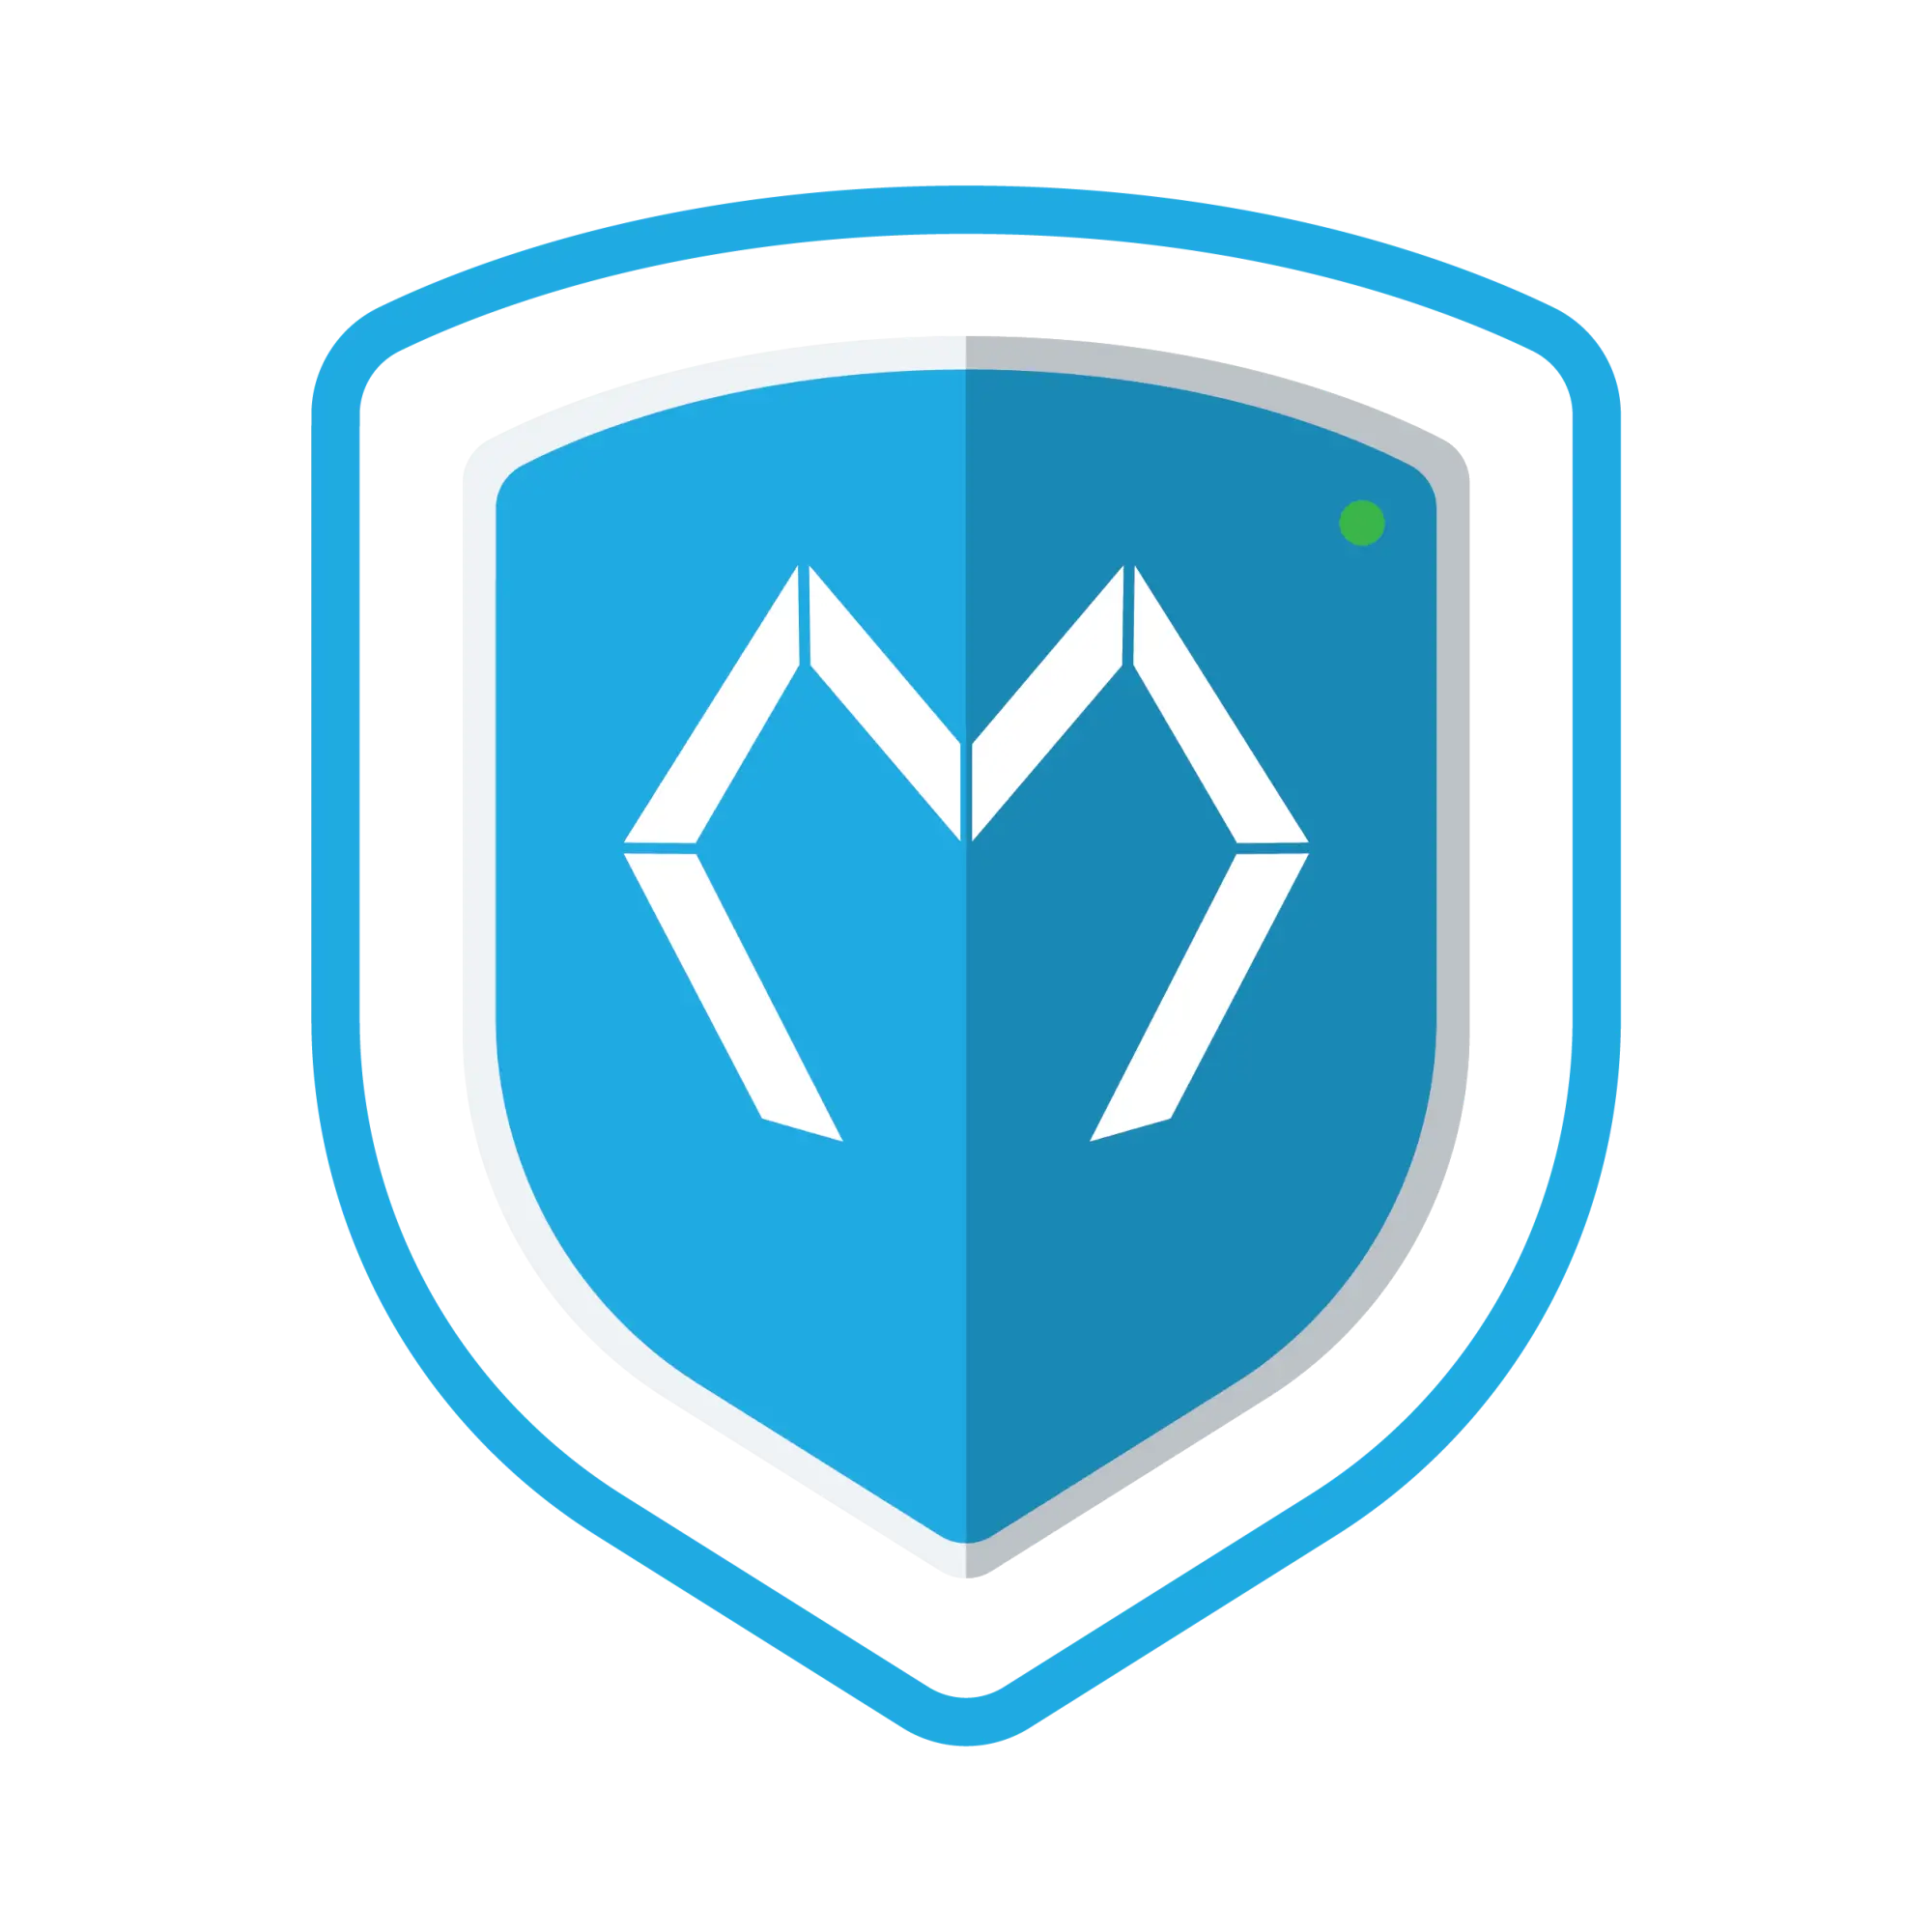 Blue shield icon containing Mycelium M Logo